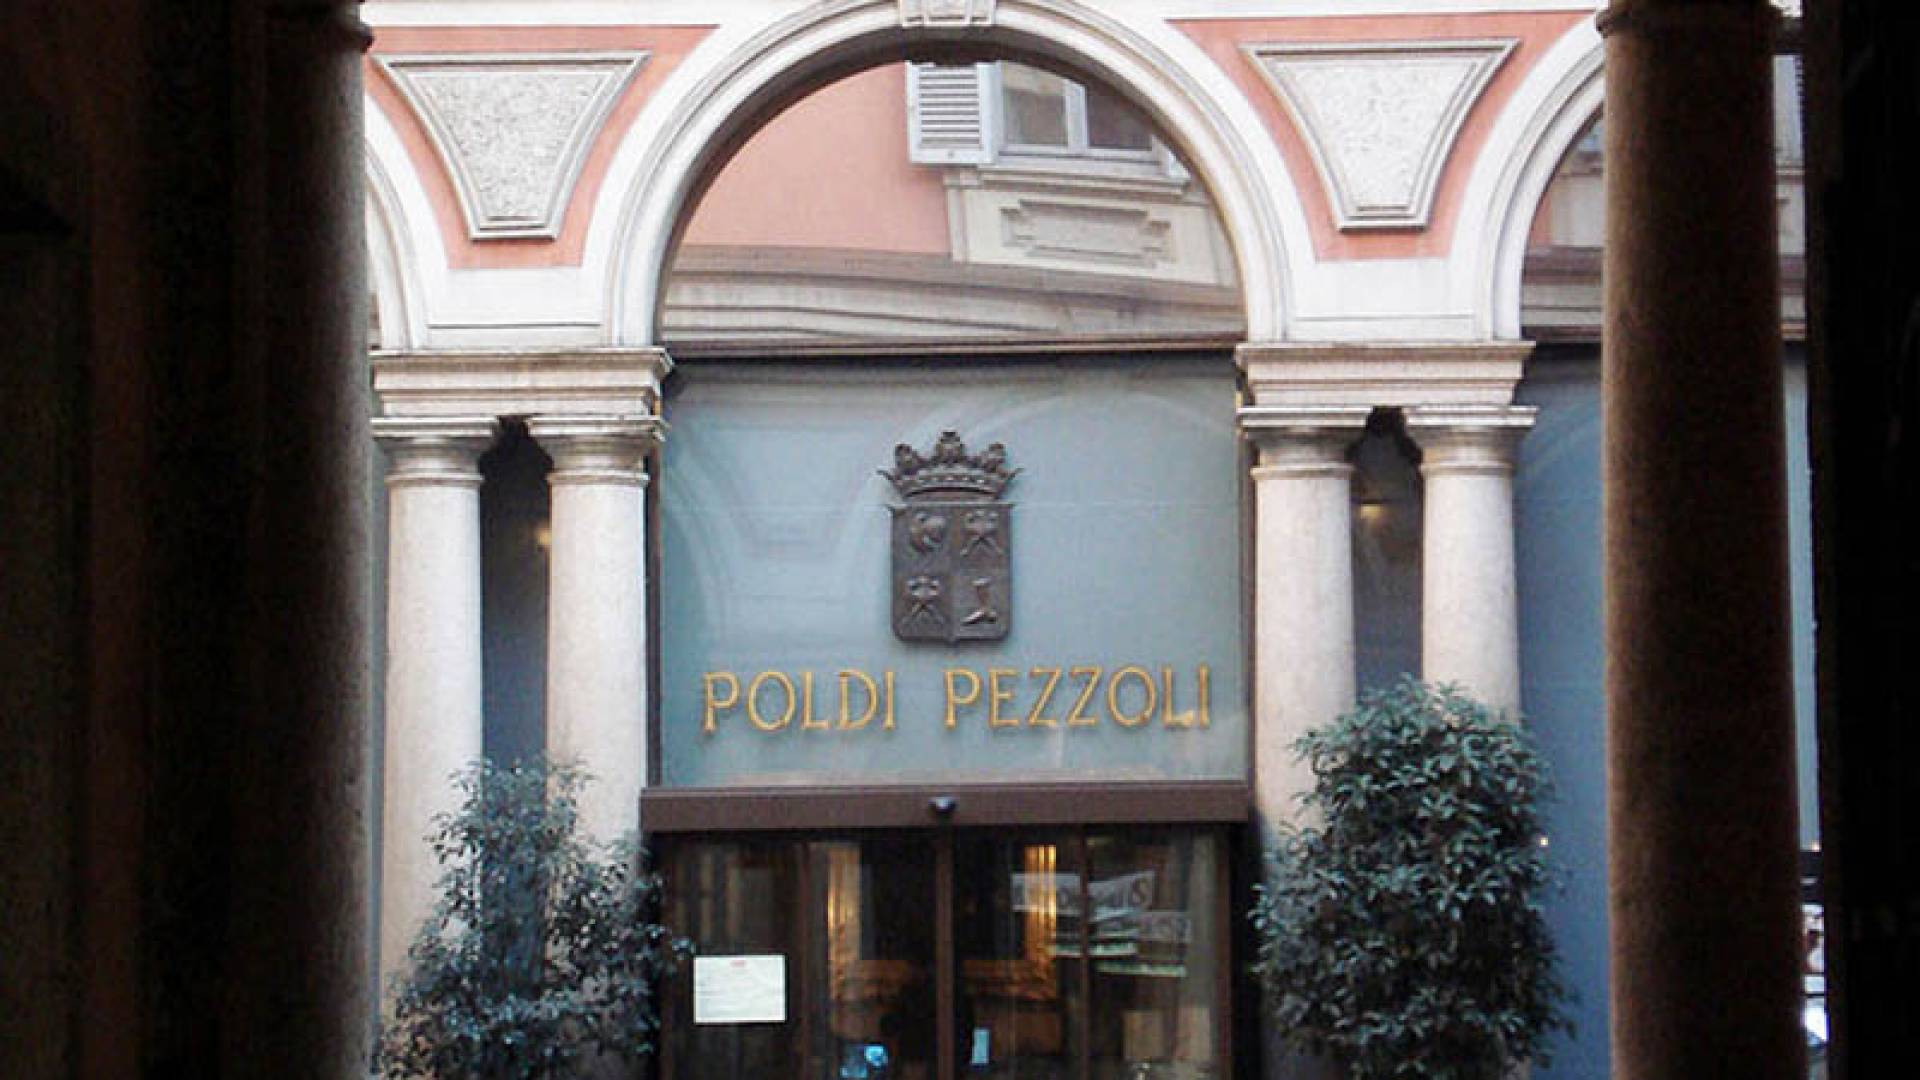 POLDI PEZZOLI MUSEUM, Introduction